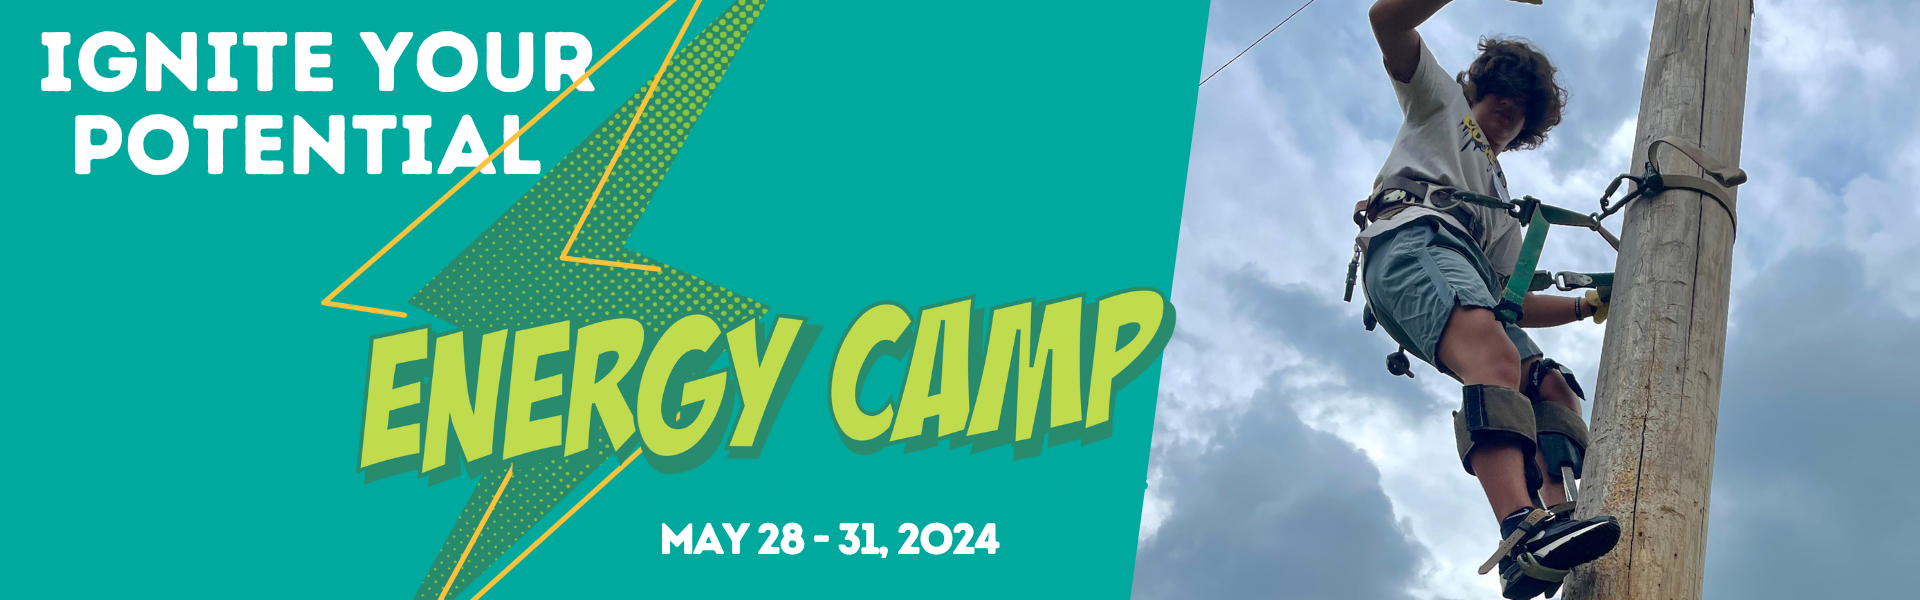 Energy Camp